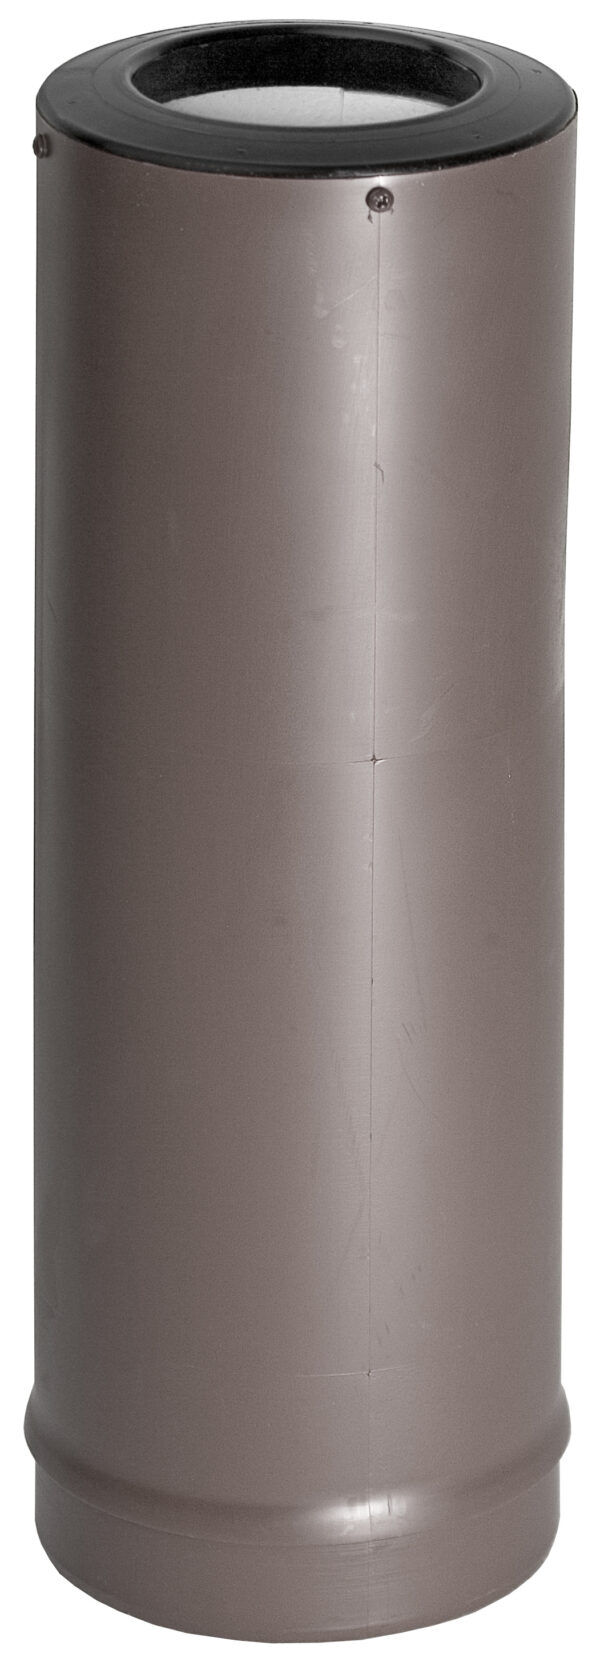 Изолирующий кожух -110 Vilpe для теплоизоляции вентиляционного выхода Ø 110 мм 2